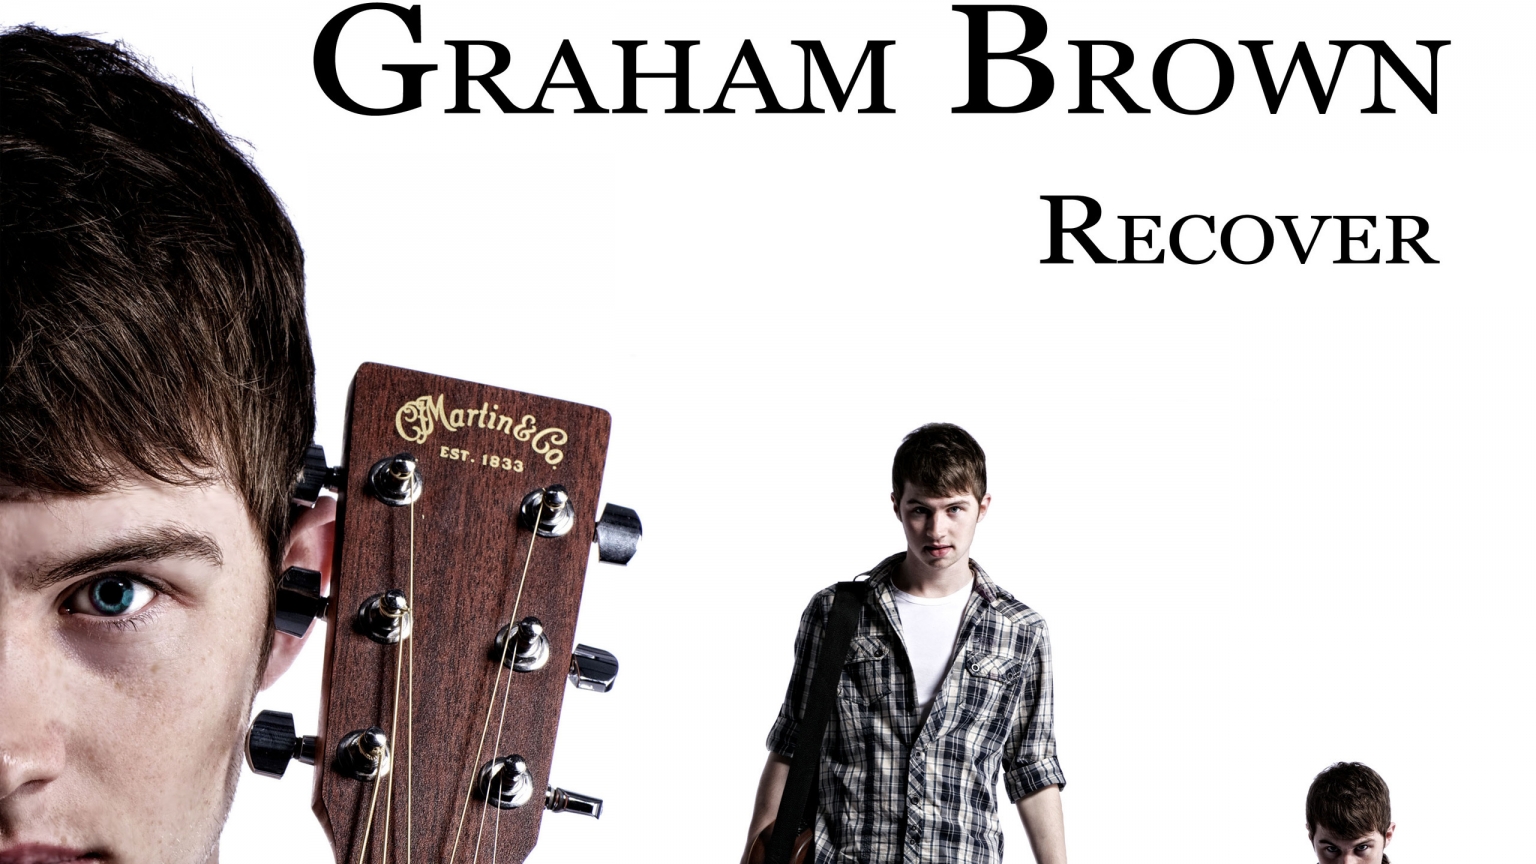 Graham Brown Band for 1536 x 864 HDTV resolution